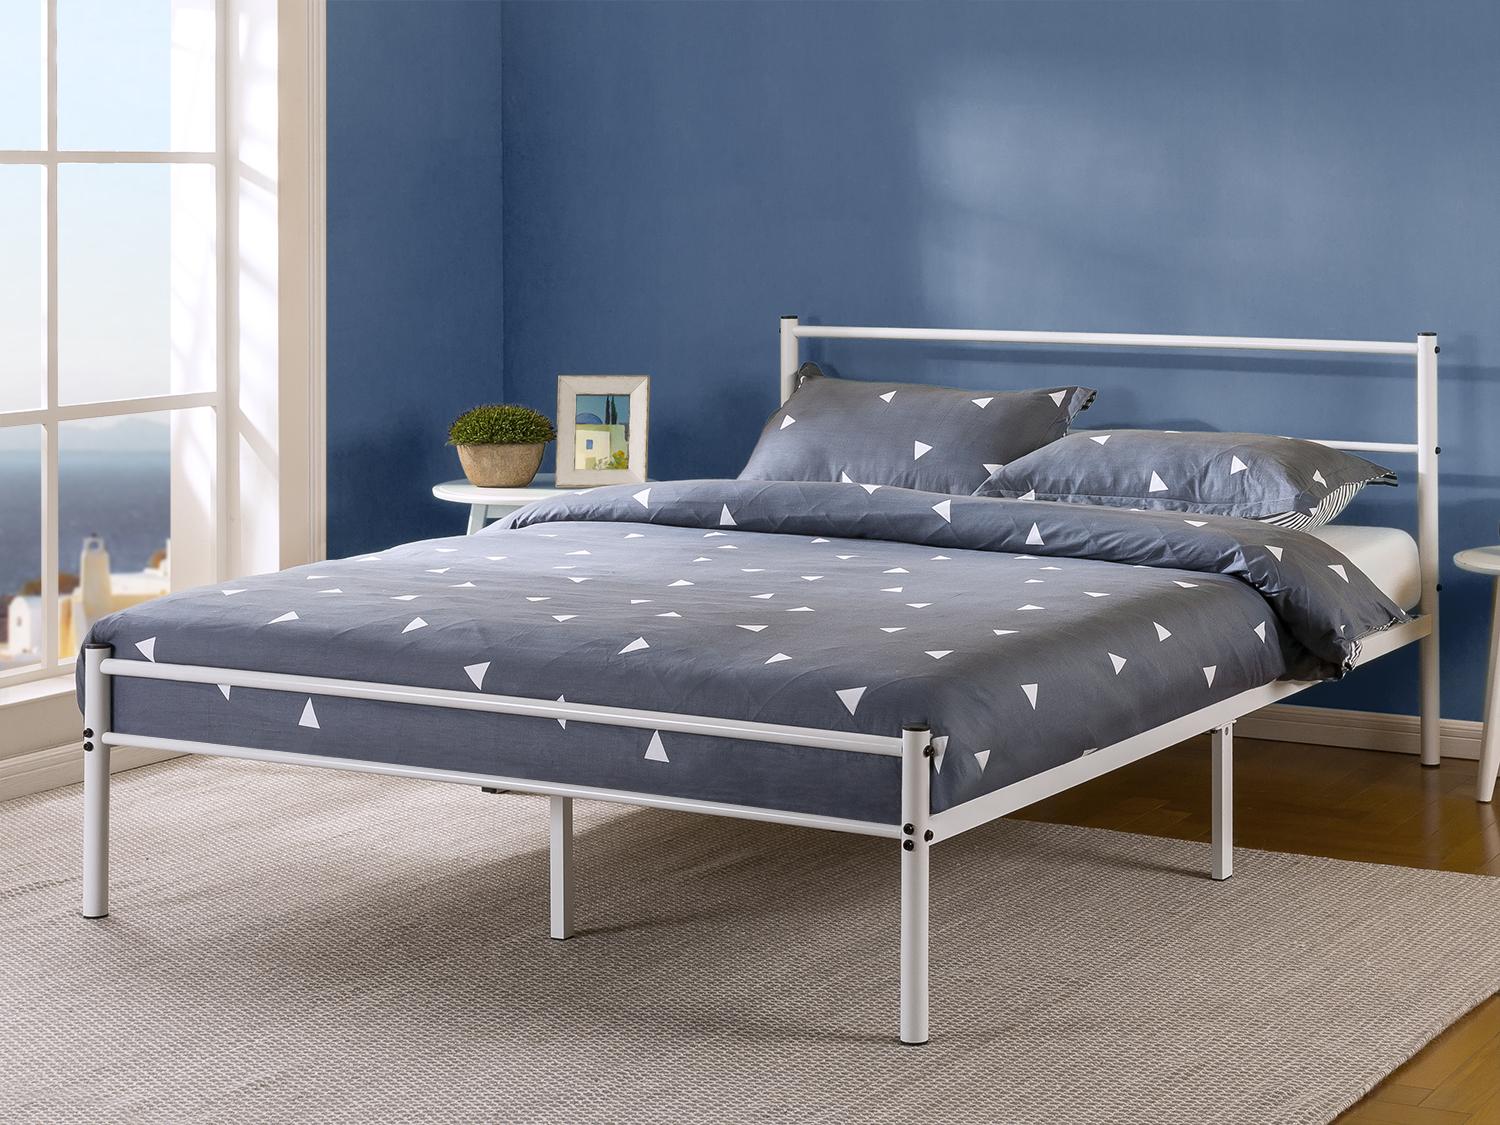 Zinus Geraldine 12in Queen Metal Platform Bed Frame for $67.81 Shipped